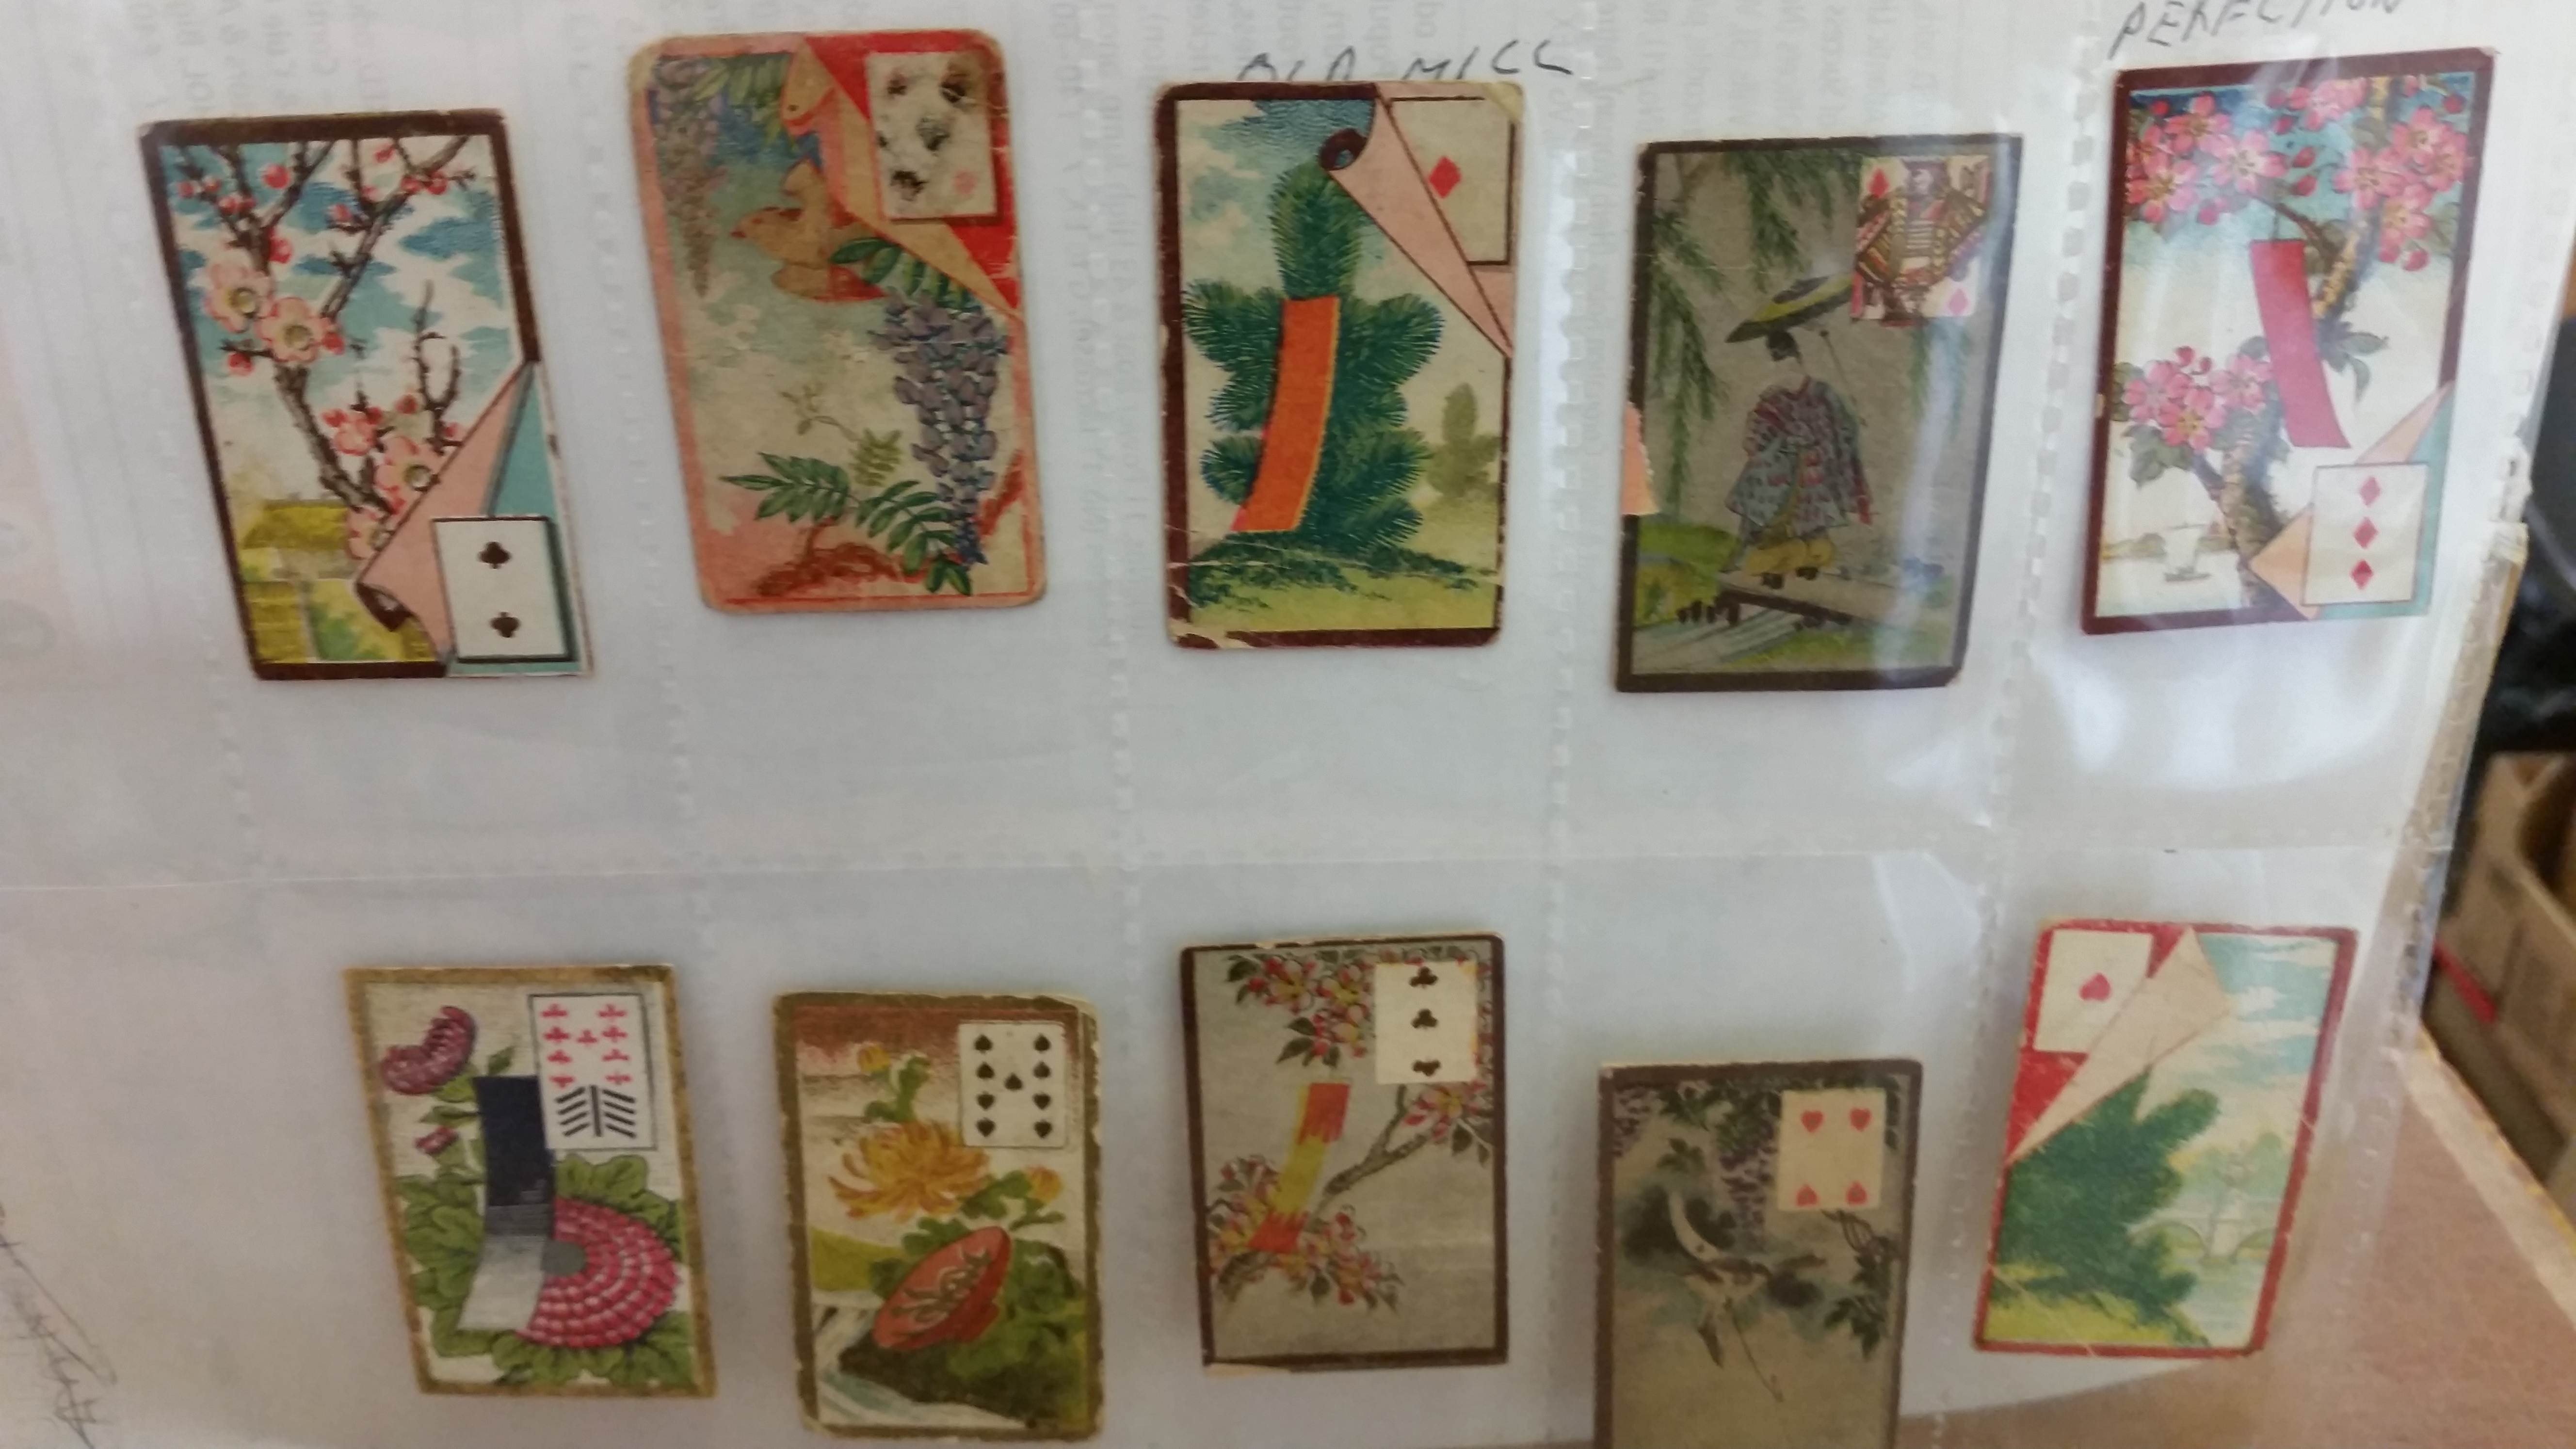 MURAI BROS., Japanese Playing Cards (p/c inset), Hanafuda, M953-272, mixed backs, p/b (3), some - Image 4 of 5